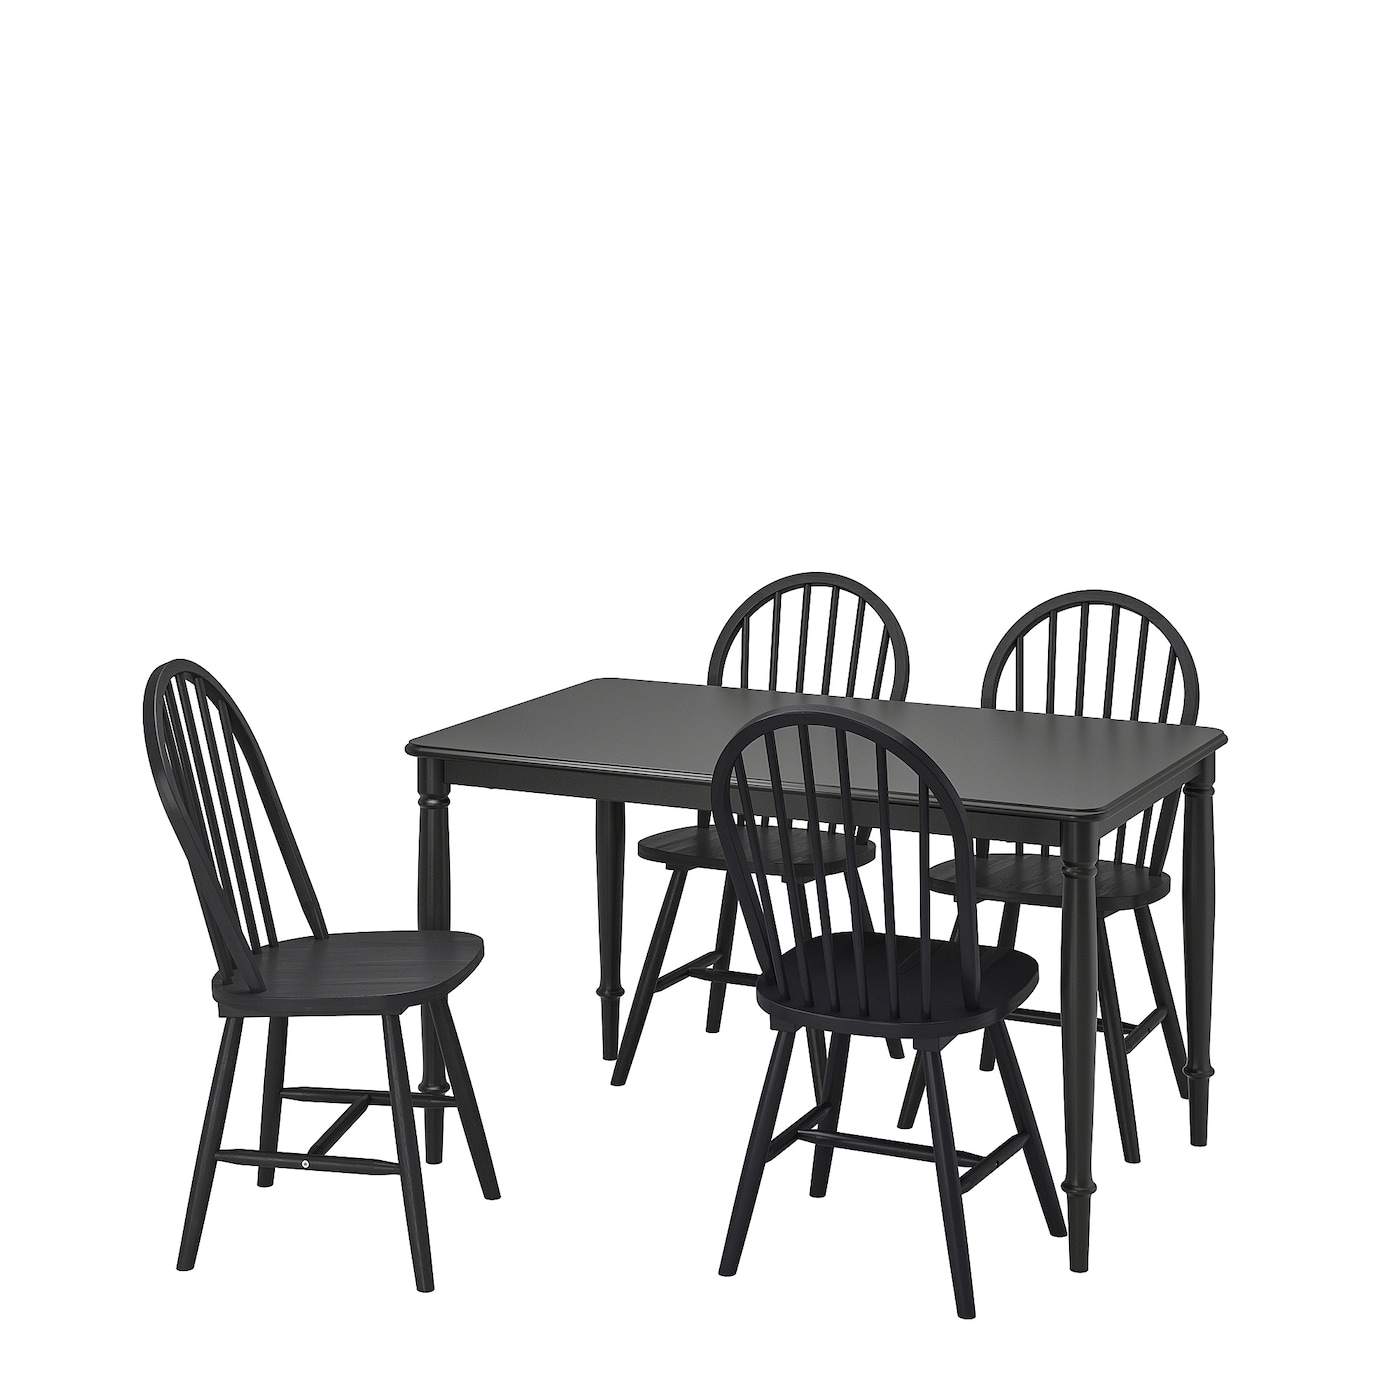 Стол и 4 стула - DANDERYD / SKOGSTA  IKEA/ ДАНДЭРЮД / СКОГСТА ИКЕА, 130х75/94х43   см, черный